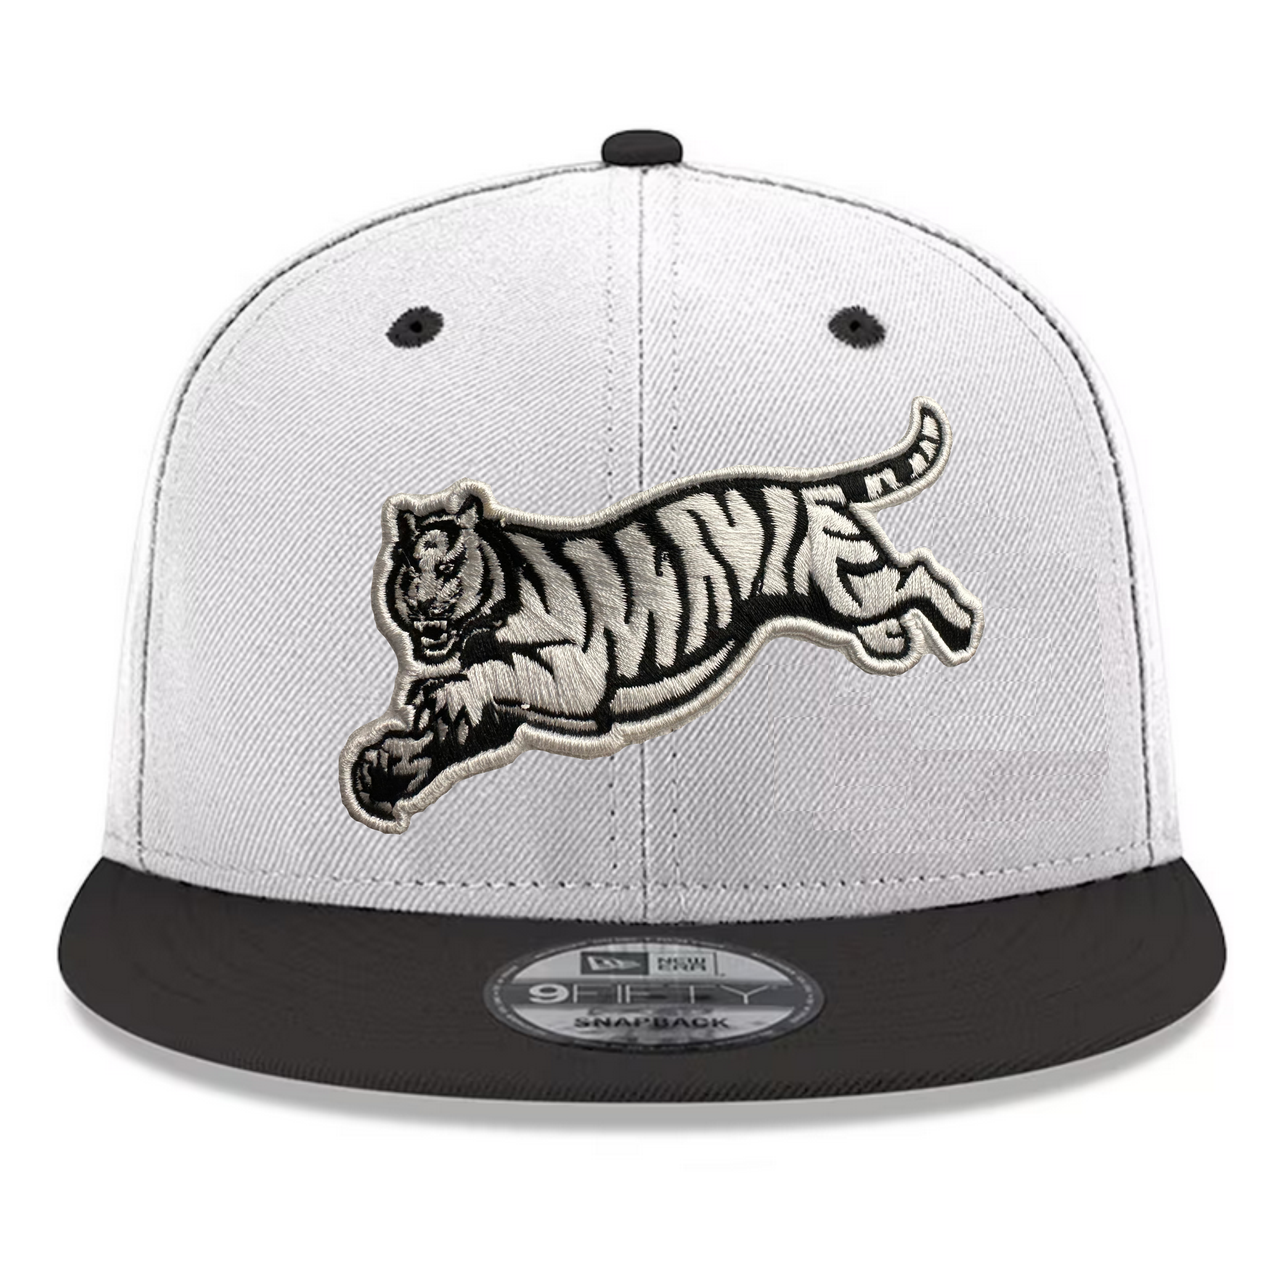 Detroit Tigers New Era Black on Black 9FIFTY Snapback Hat